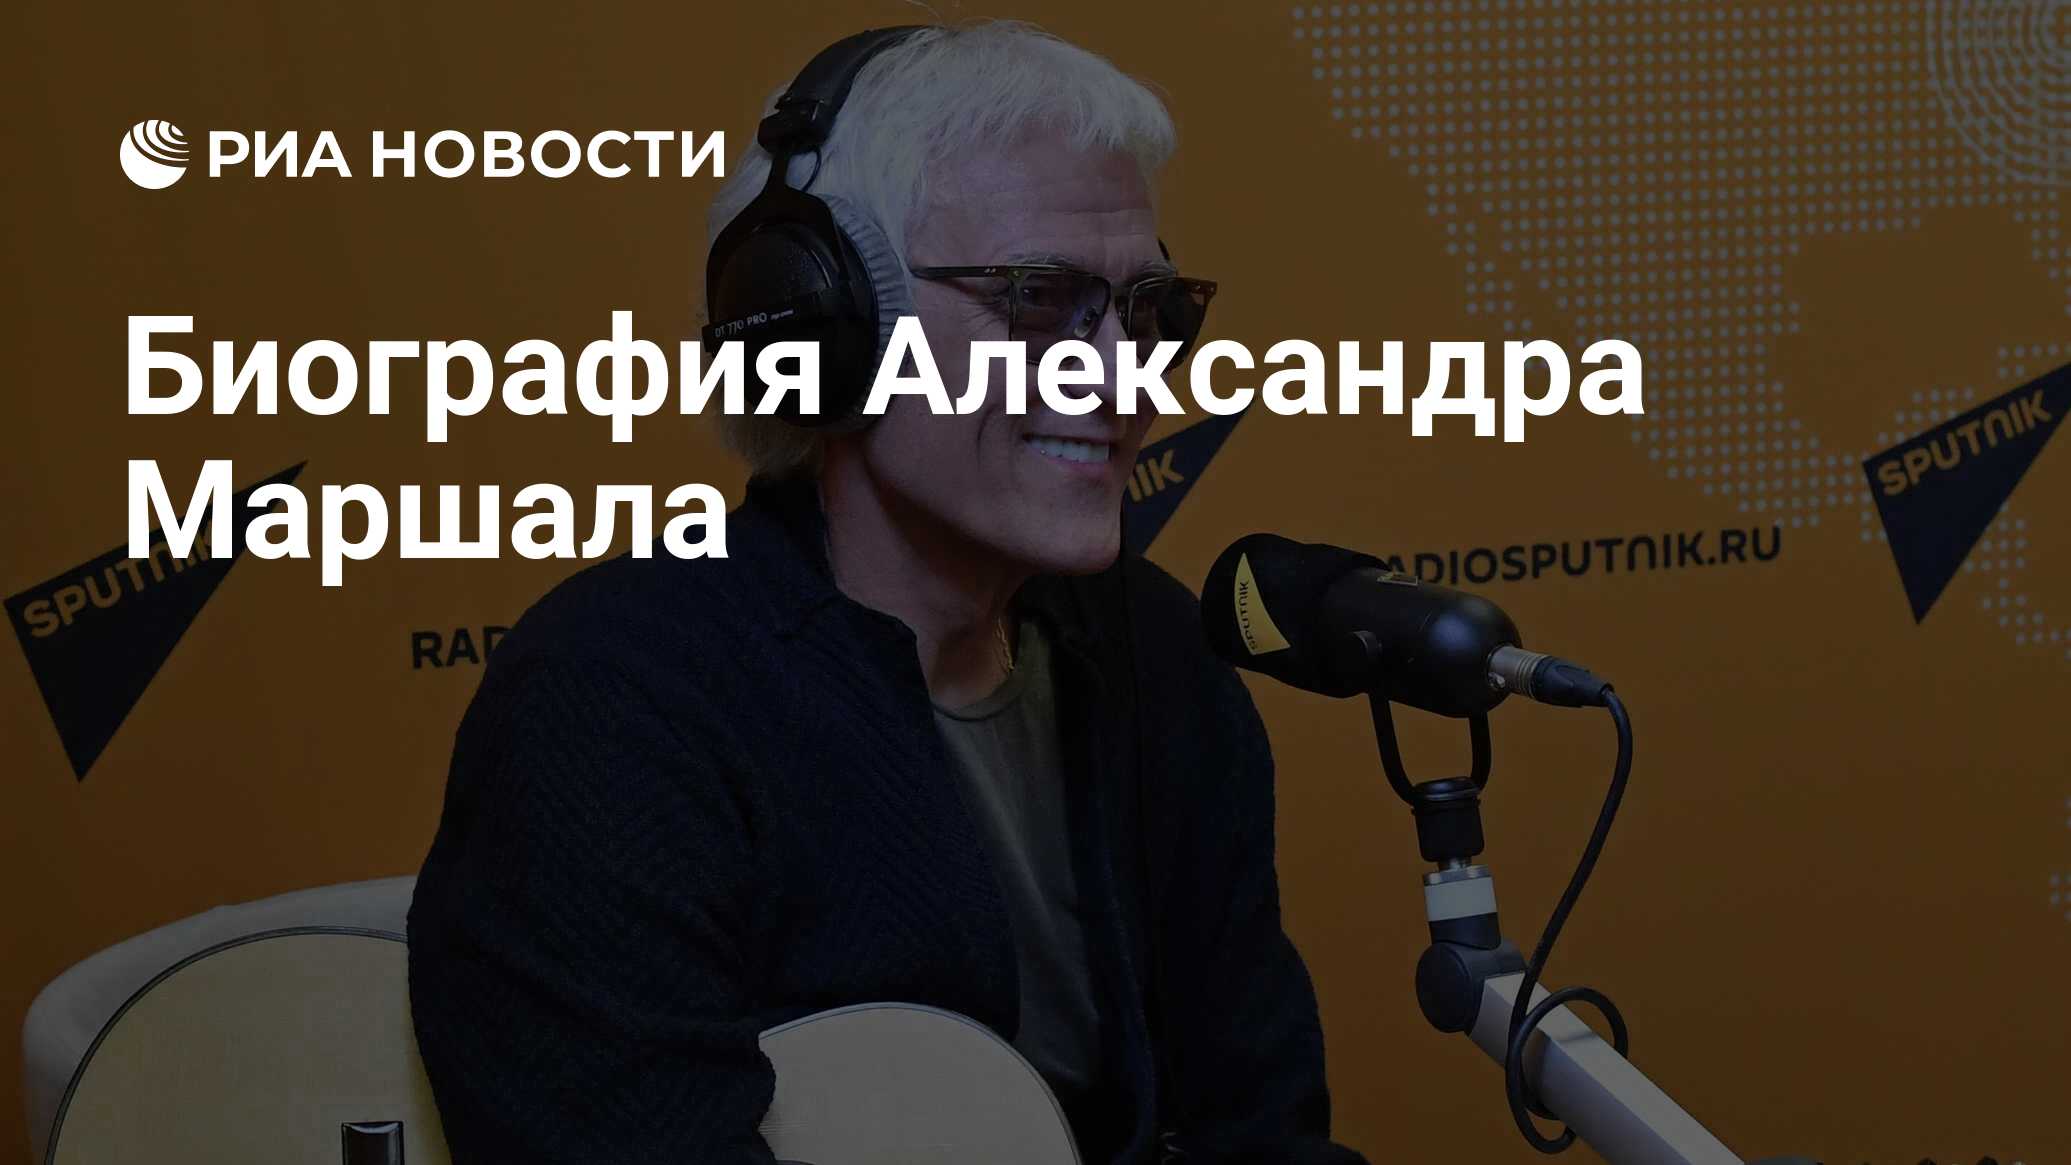 Биография Александра Маршала - РИА Новости, 07.06.2022